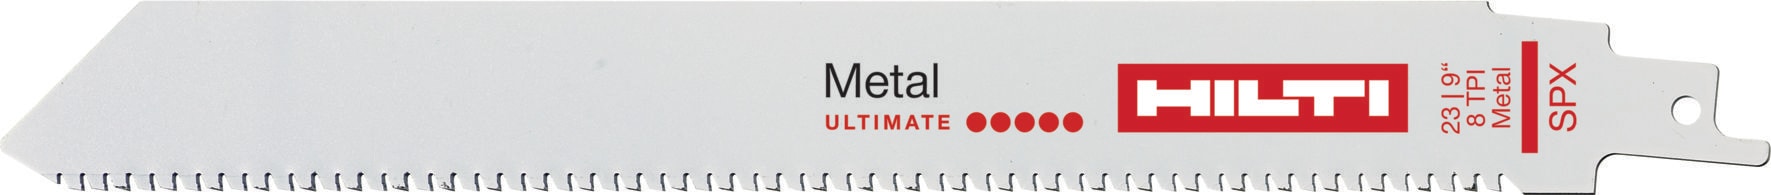 Säbelsägeblatt (Hartmetall) für dicke Metalle - Sägeblätter - Hilti  Deutschland